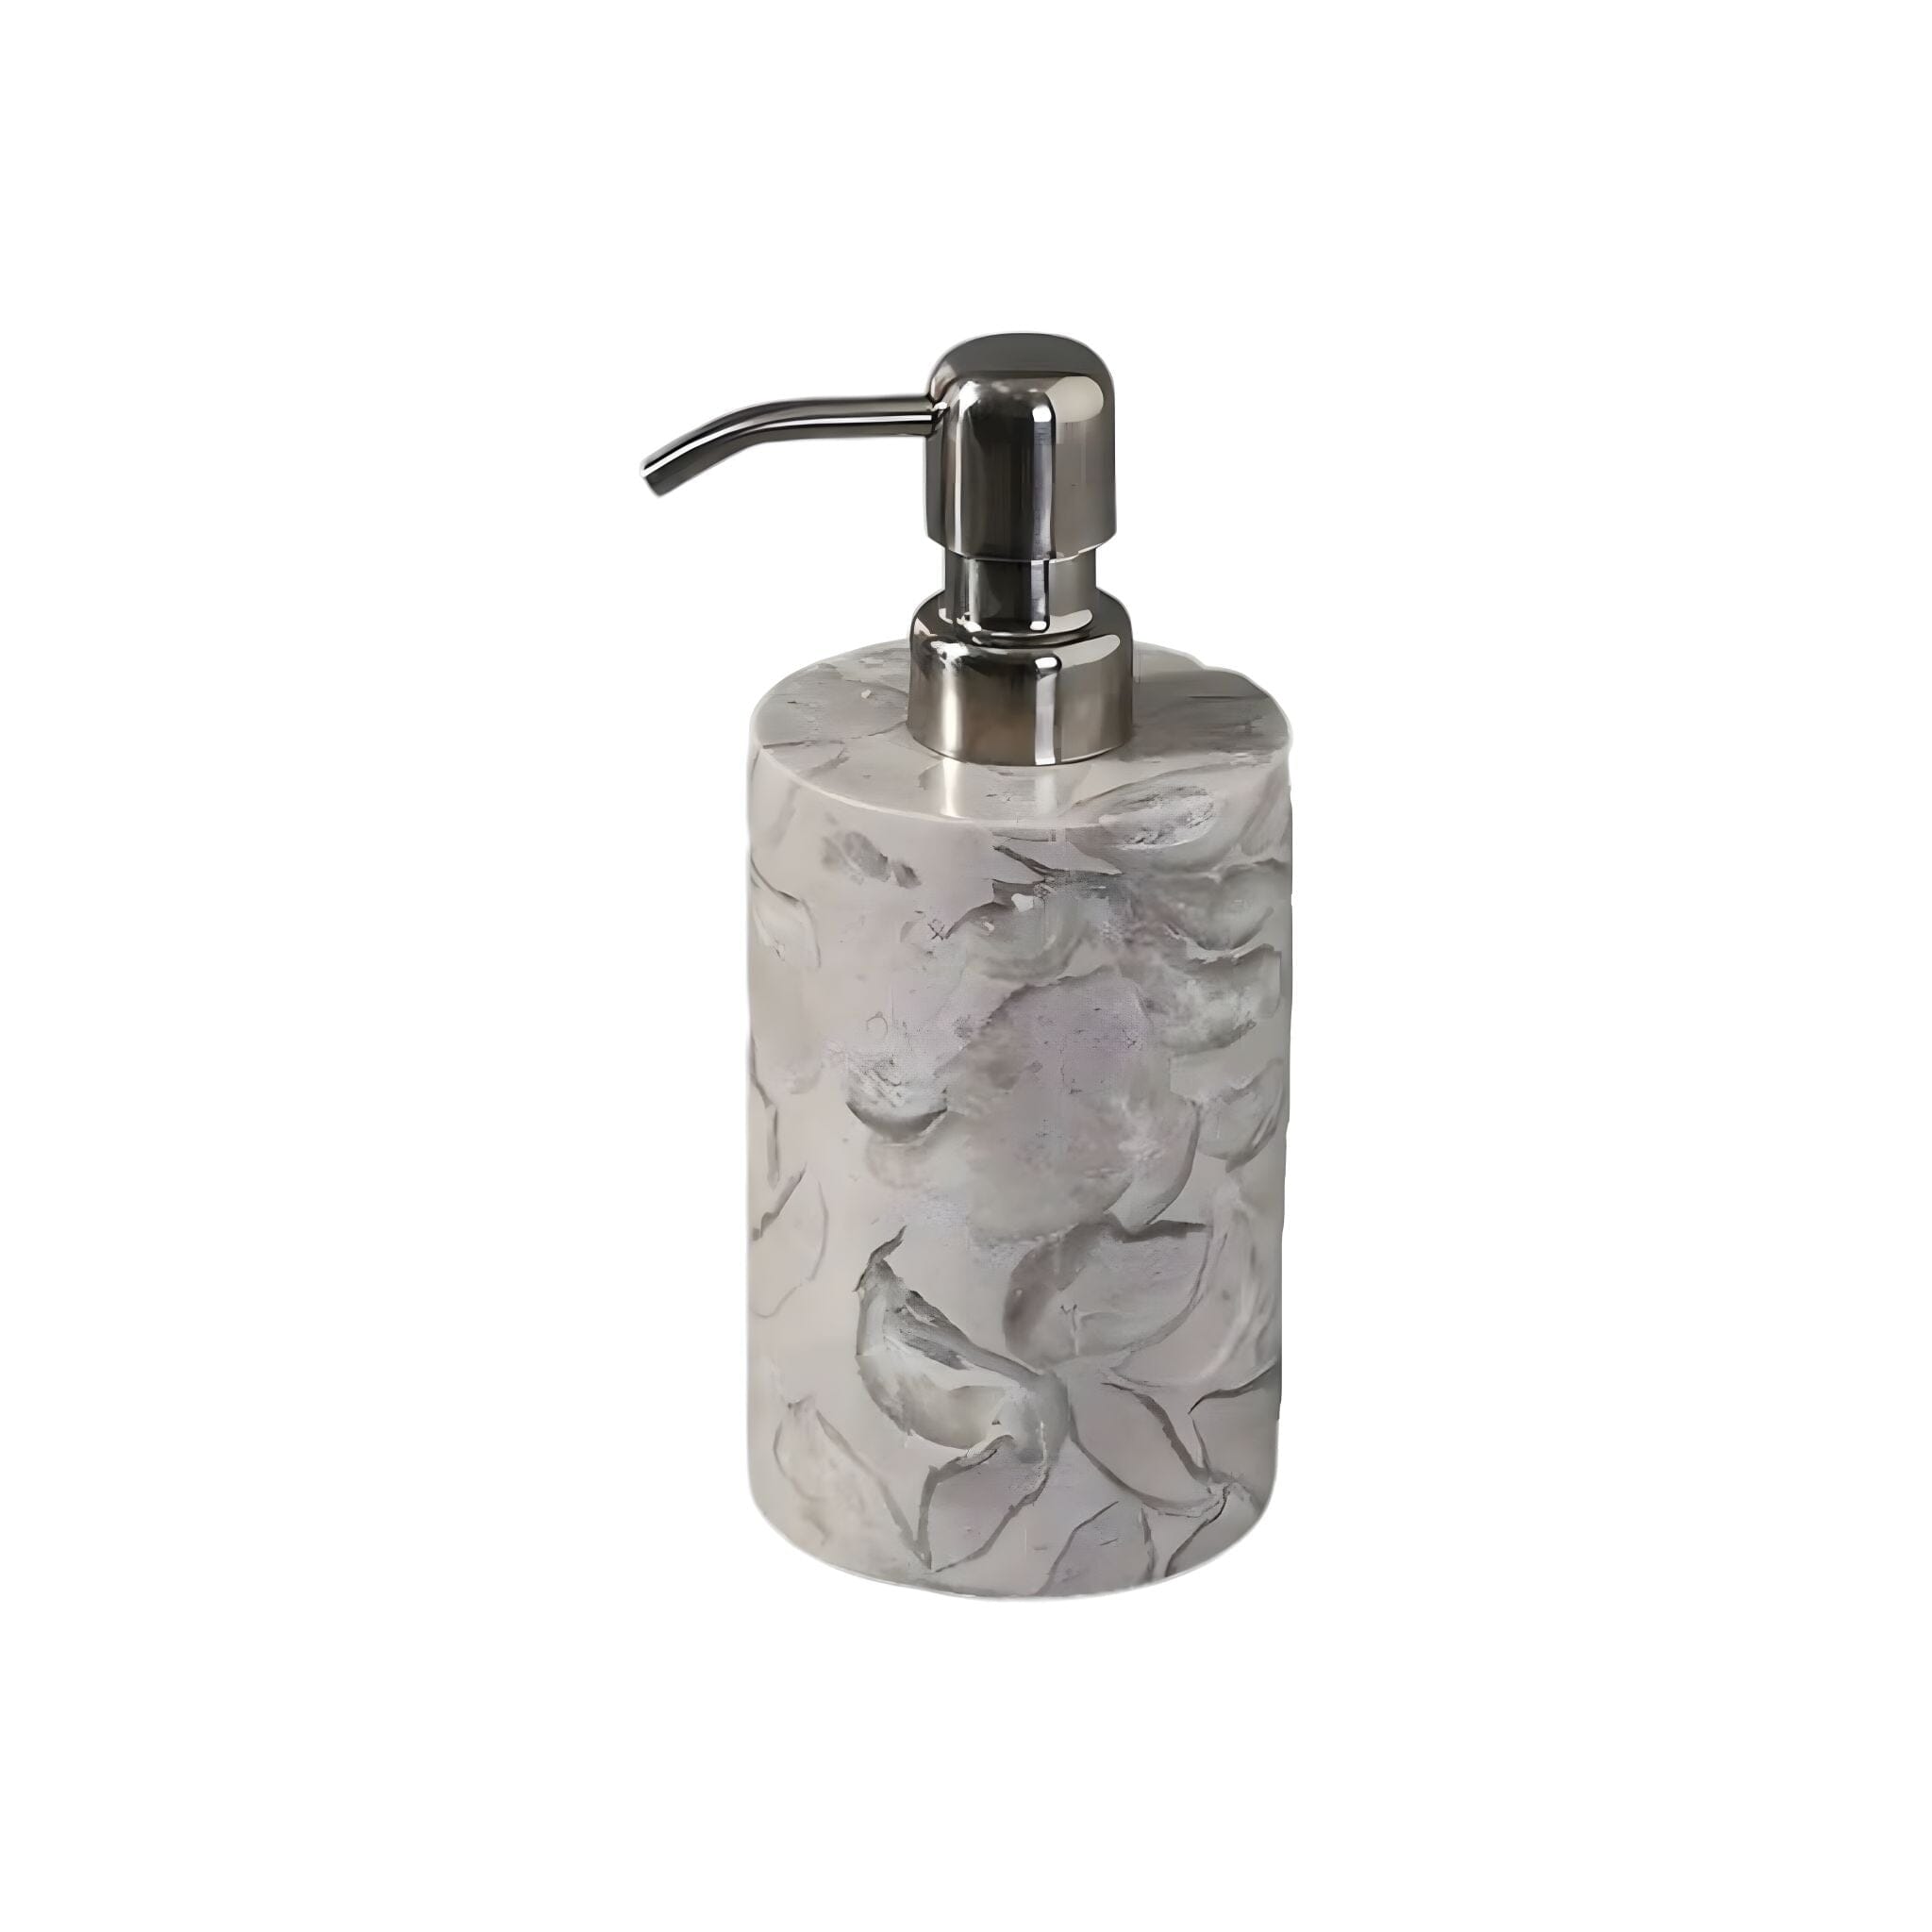 Odette Bathroom Accessories Collection Bathroom Accessories Soap Dispenser (silver) 